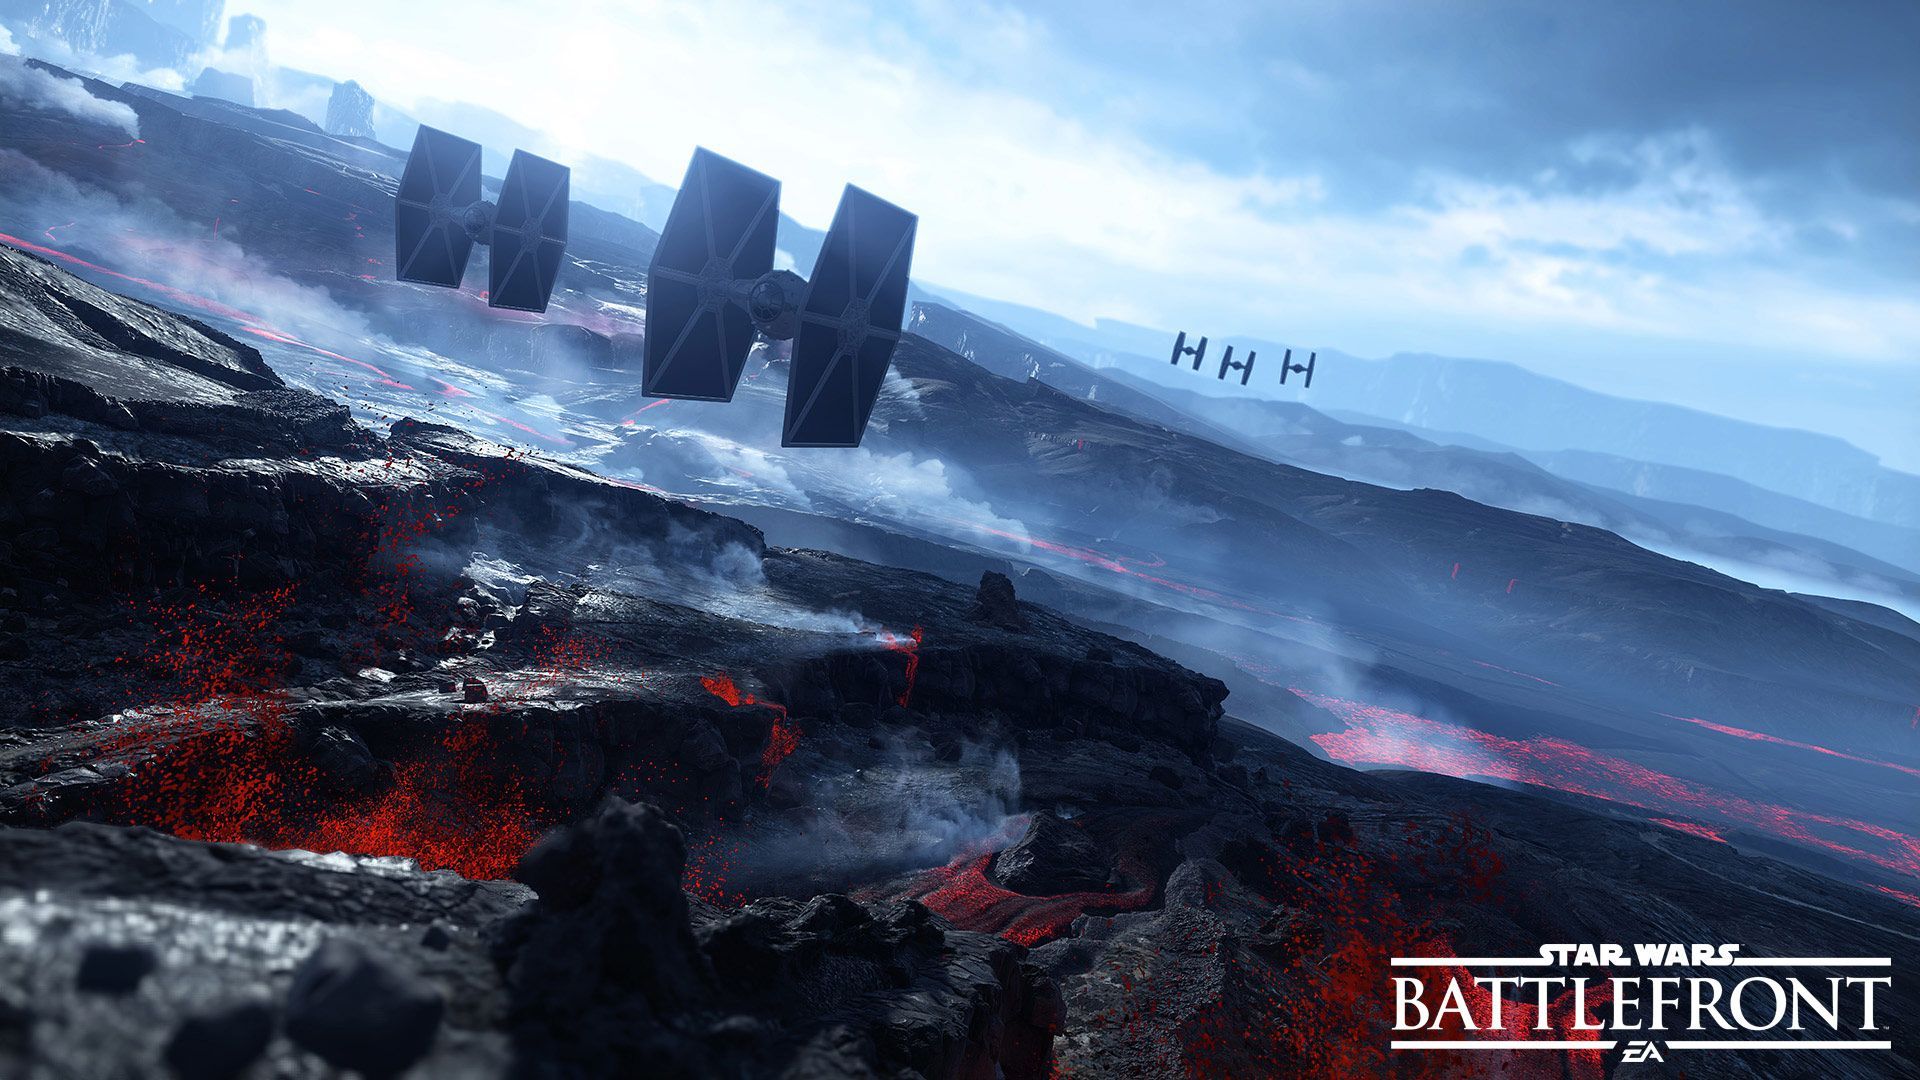 Star Wars™ Battlefront™ Wallpapers - Star Wars - Official EA Site